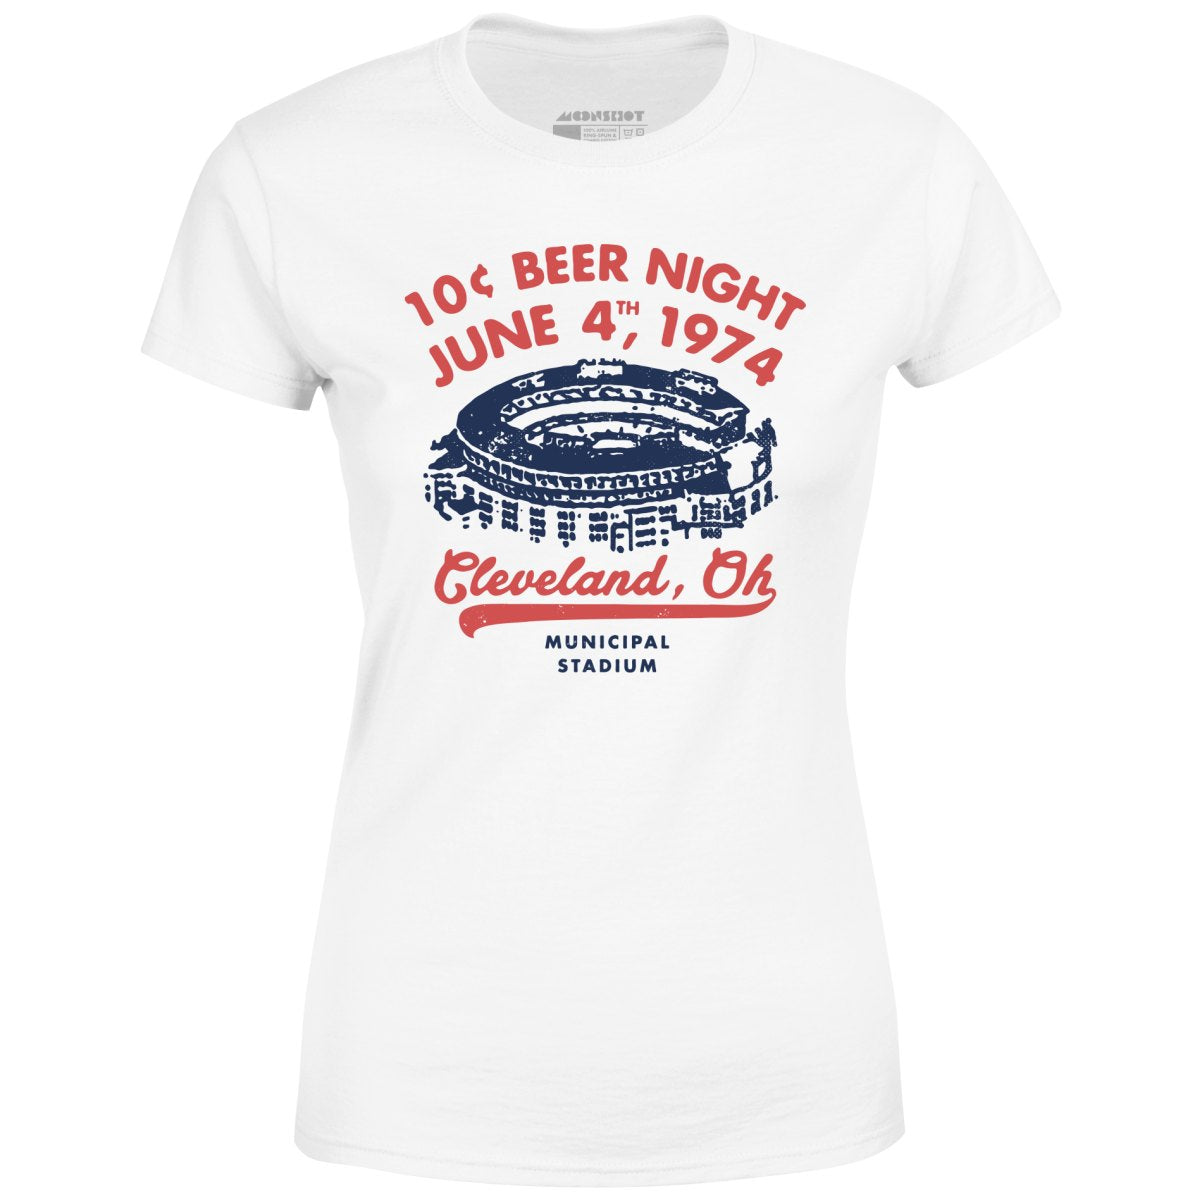 Ten Cent Beer Night - Cleveland Ohio - Women's T-Shirt